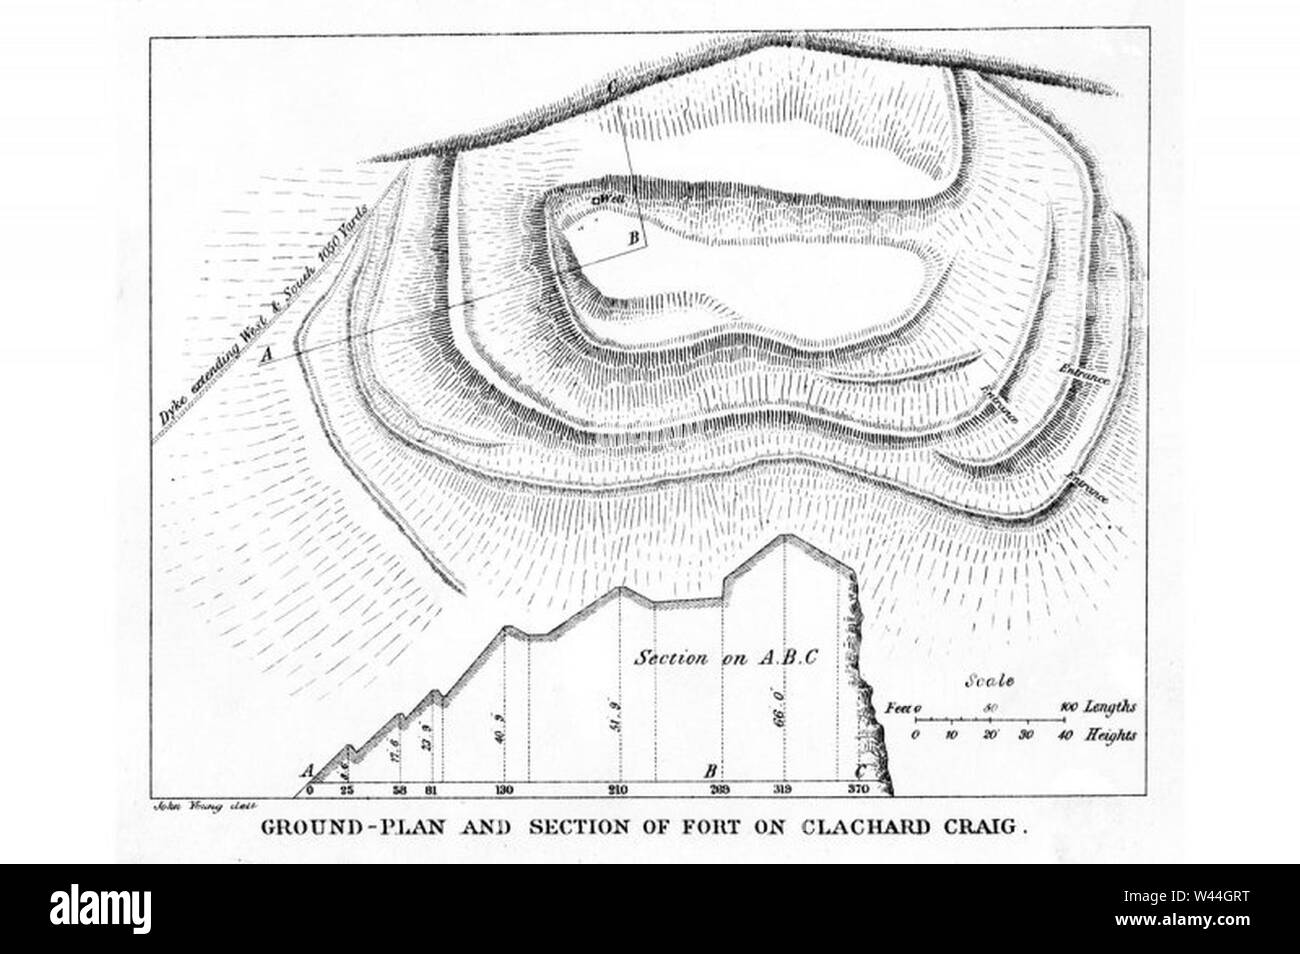 Clatchard Craig Plan. Stock Photo